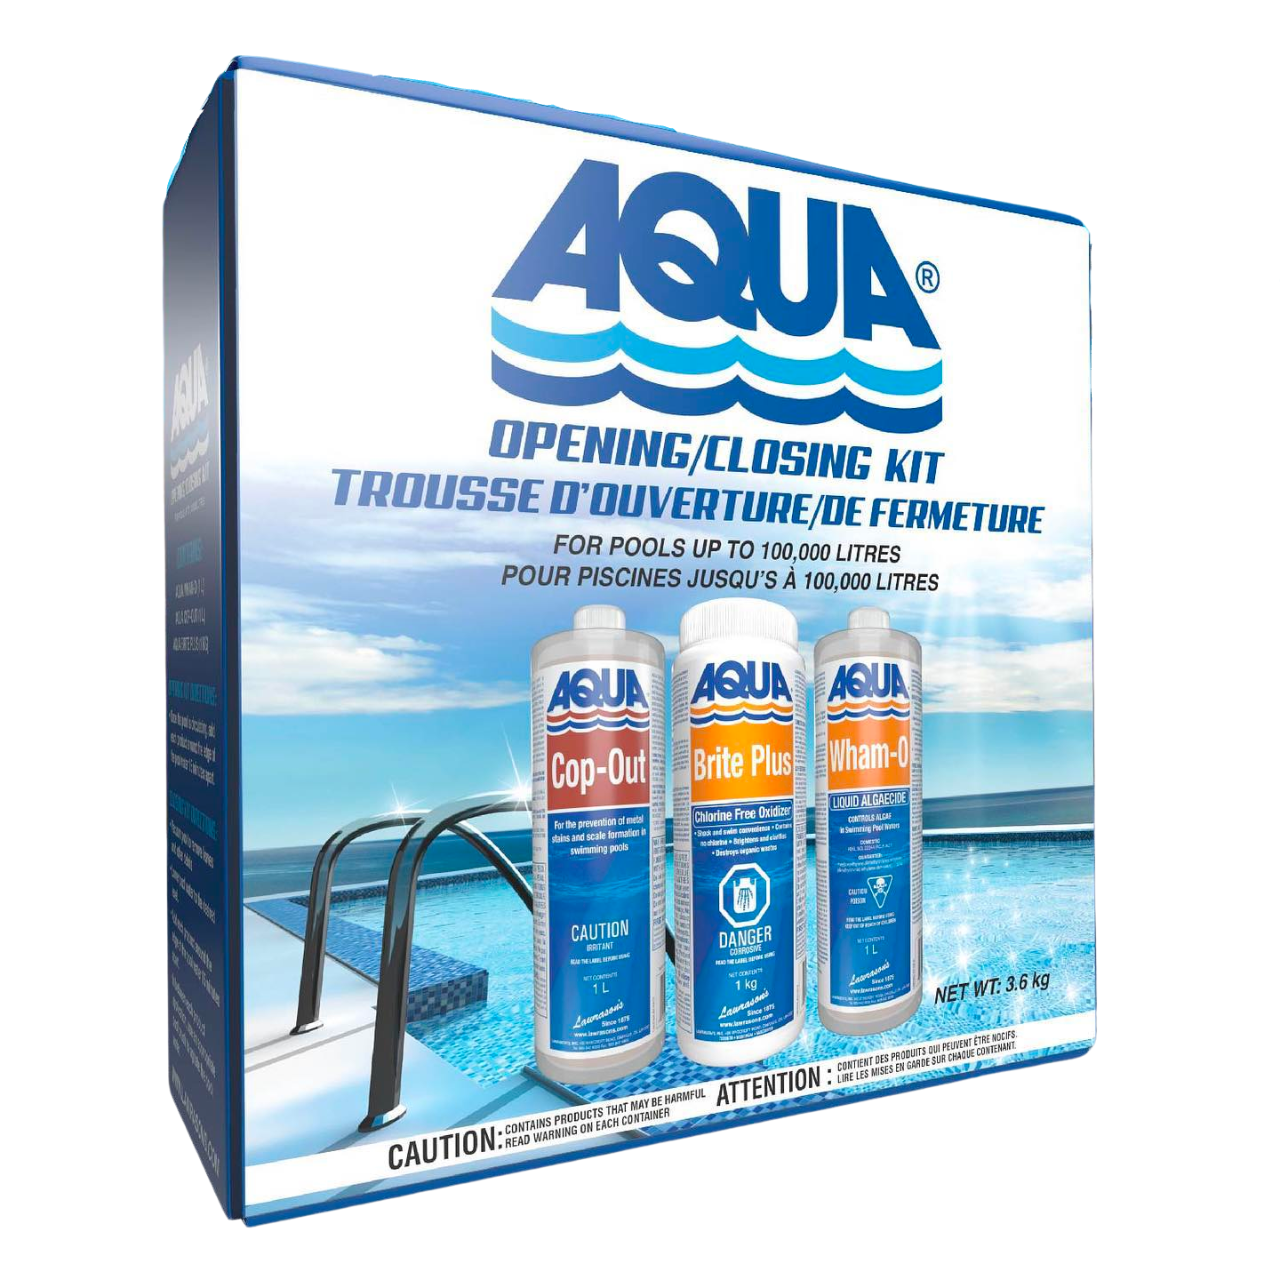 Aqua Above Ground Opening/Closing Kit